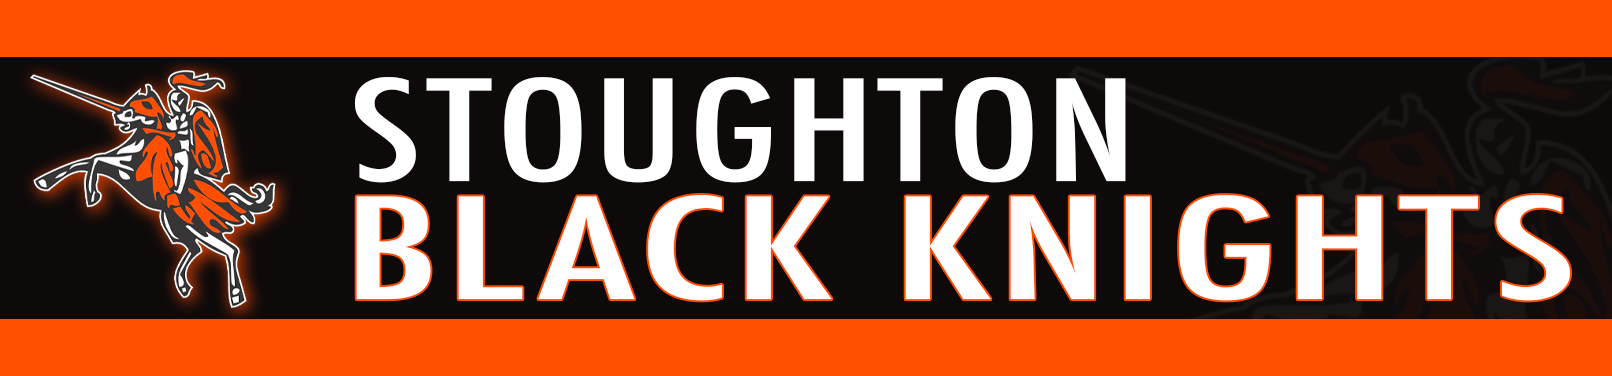 Stoughton Black Knights